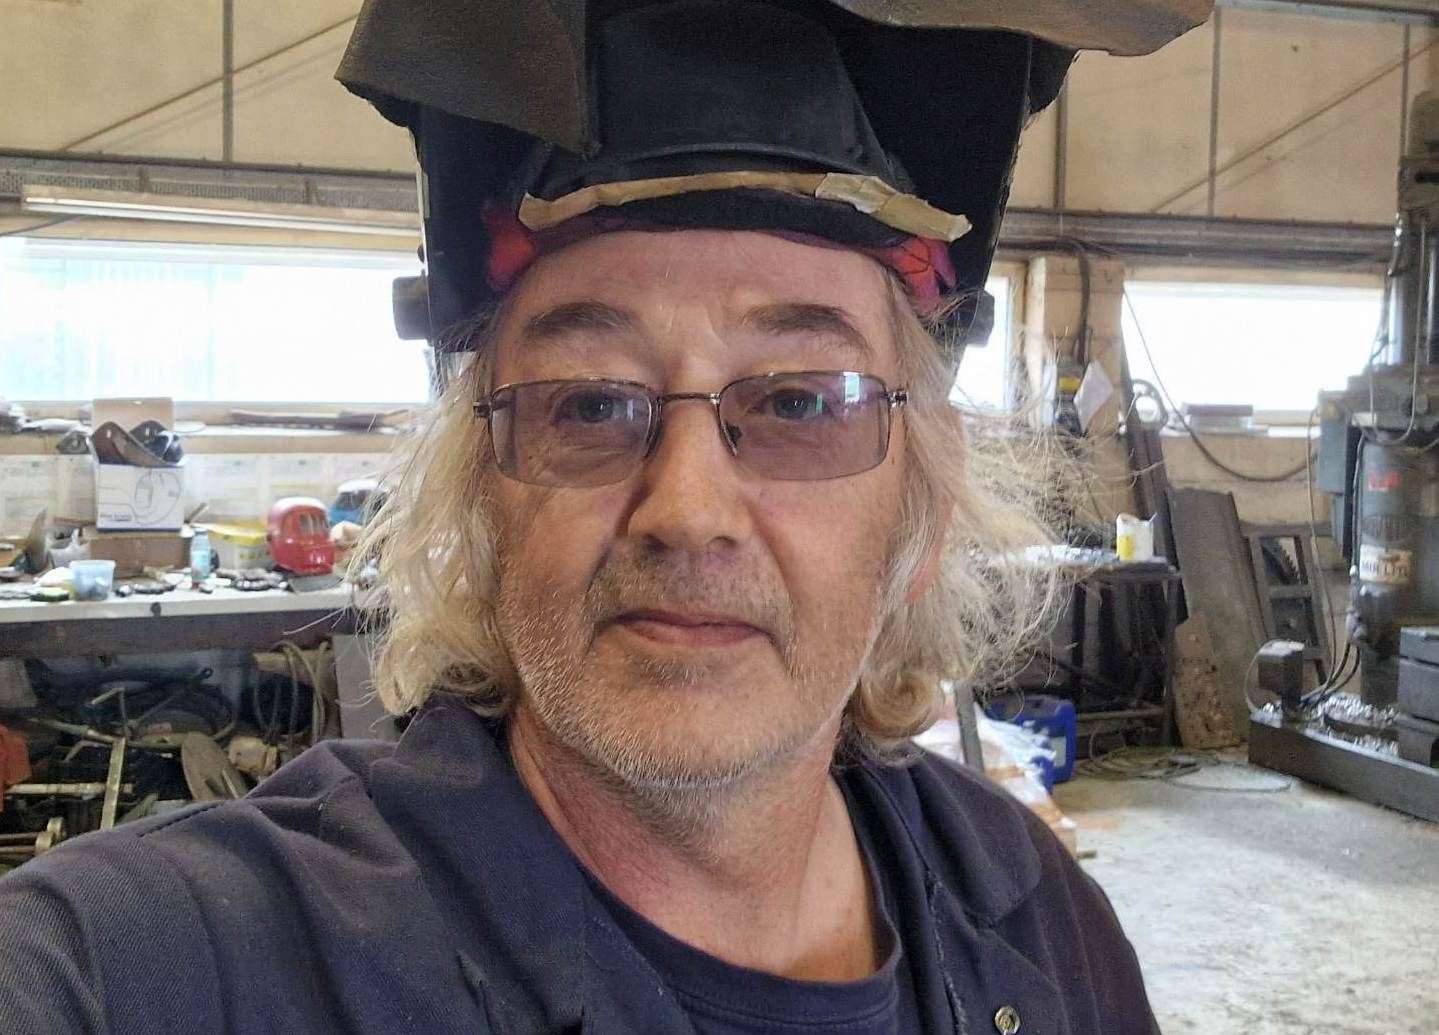 Jon Allcorn is a former fabricator welder